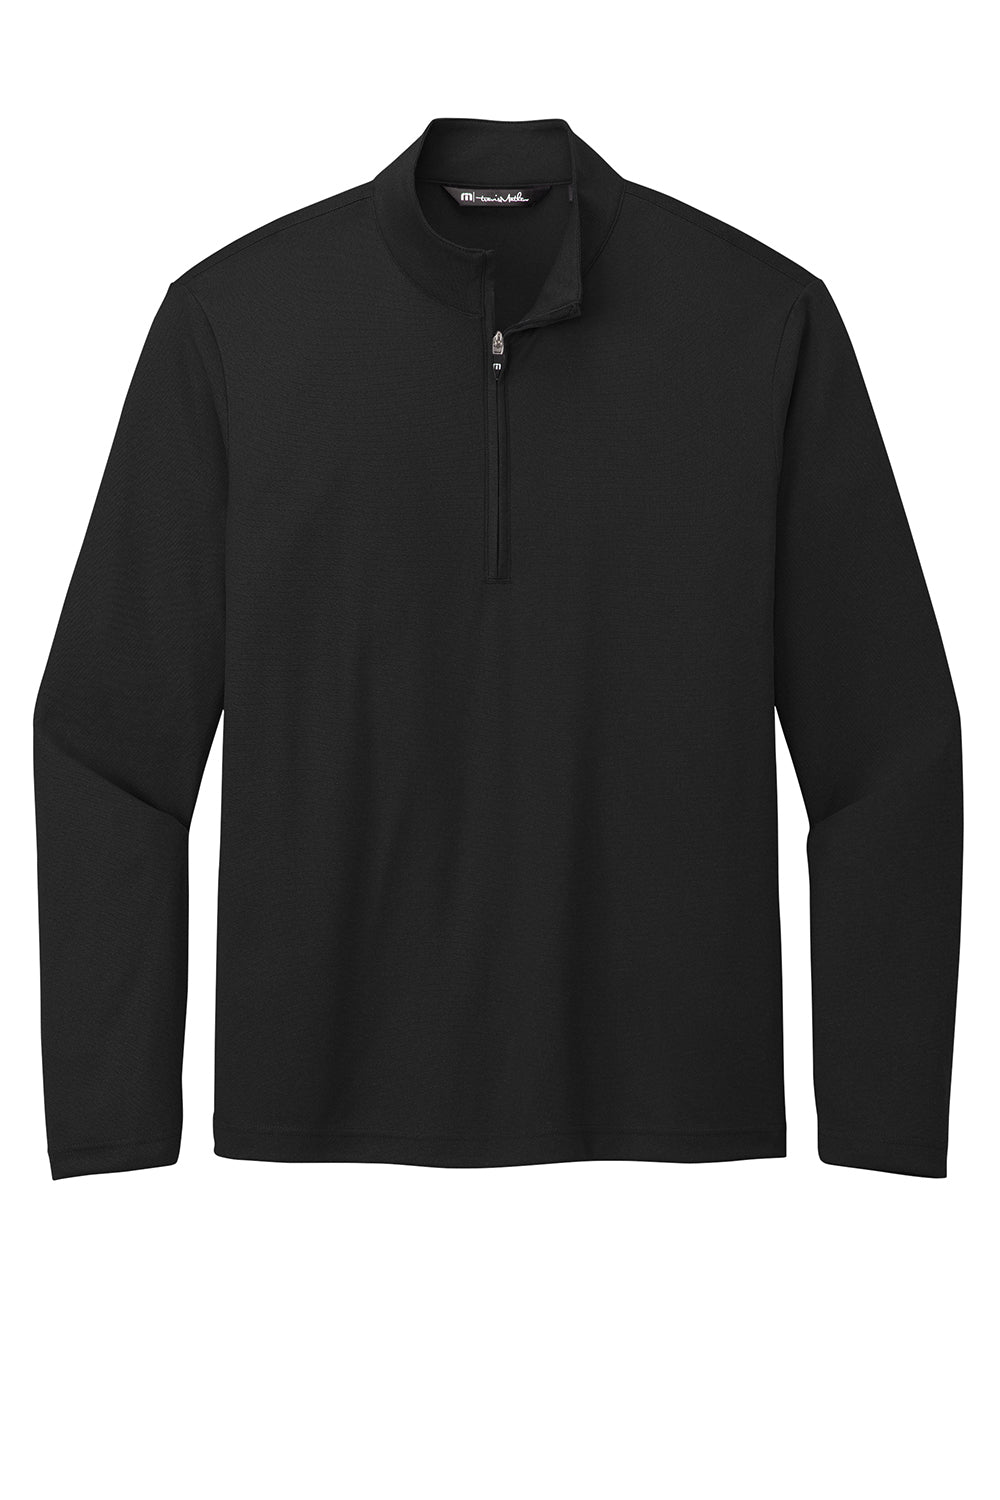 TravisMathew TM1MY397 Mens Coto Performance Wrinkle Resistant 1/4 Zip Sweatshirt Black Flat Front